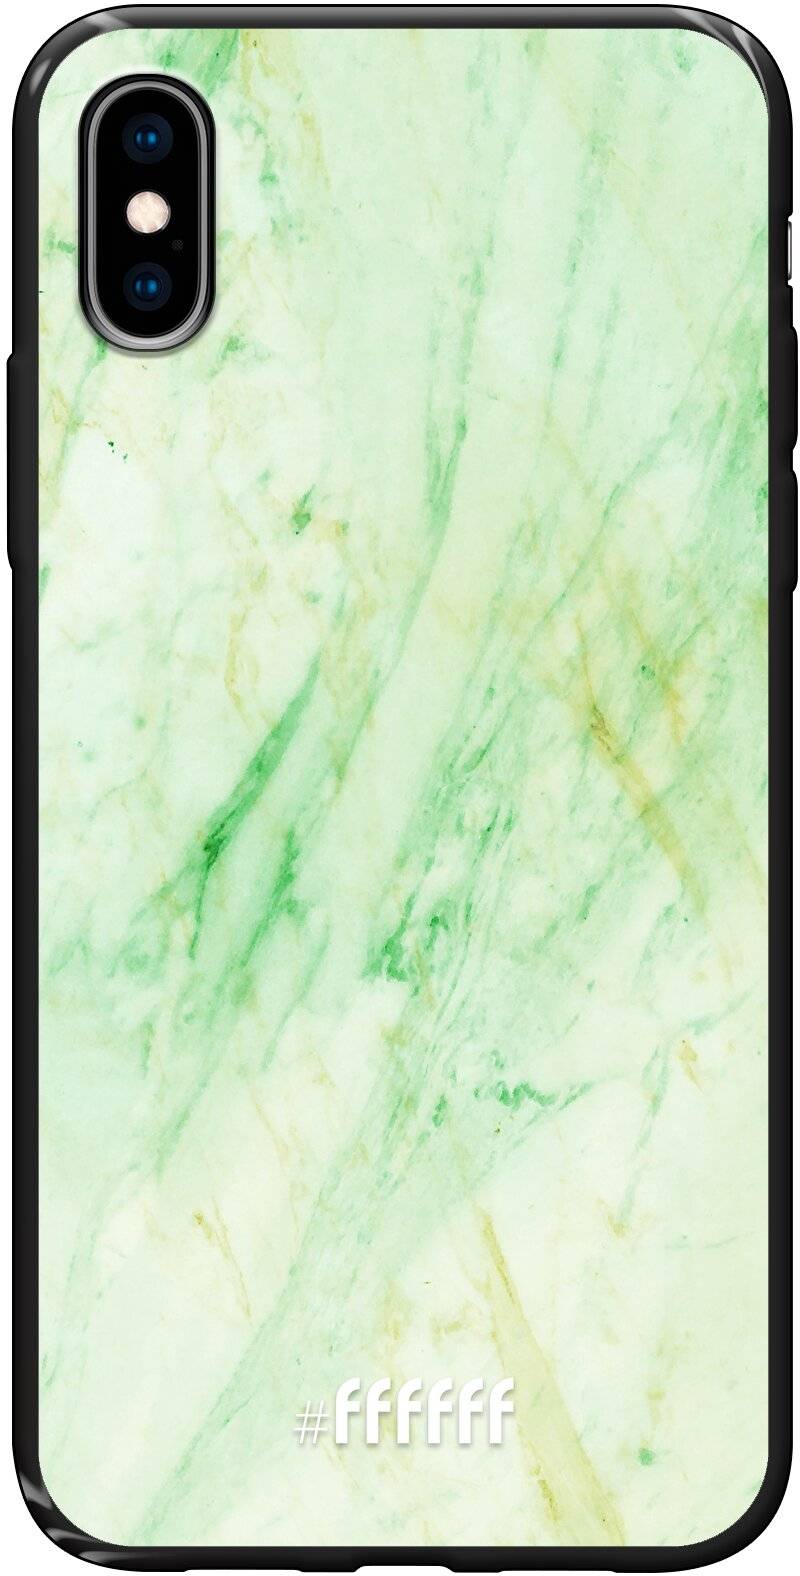 Pistachio Marble iPhone X